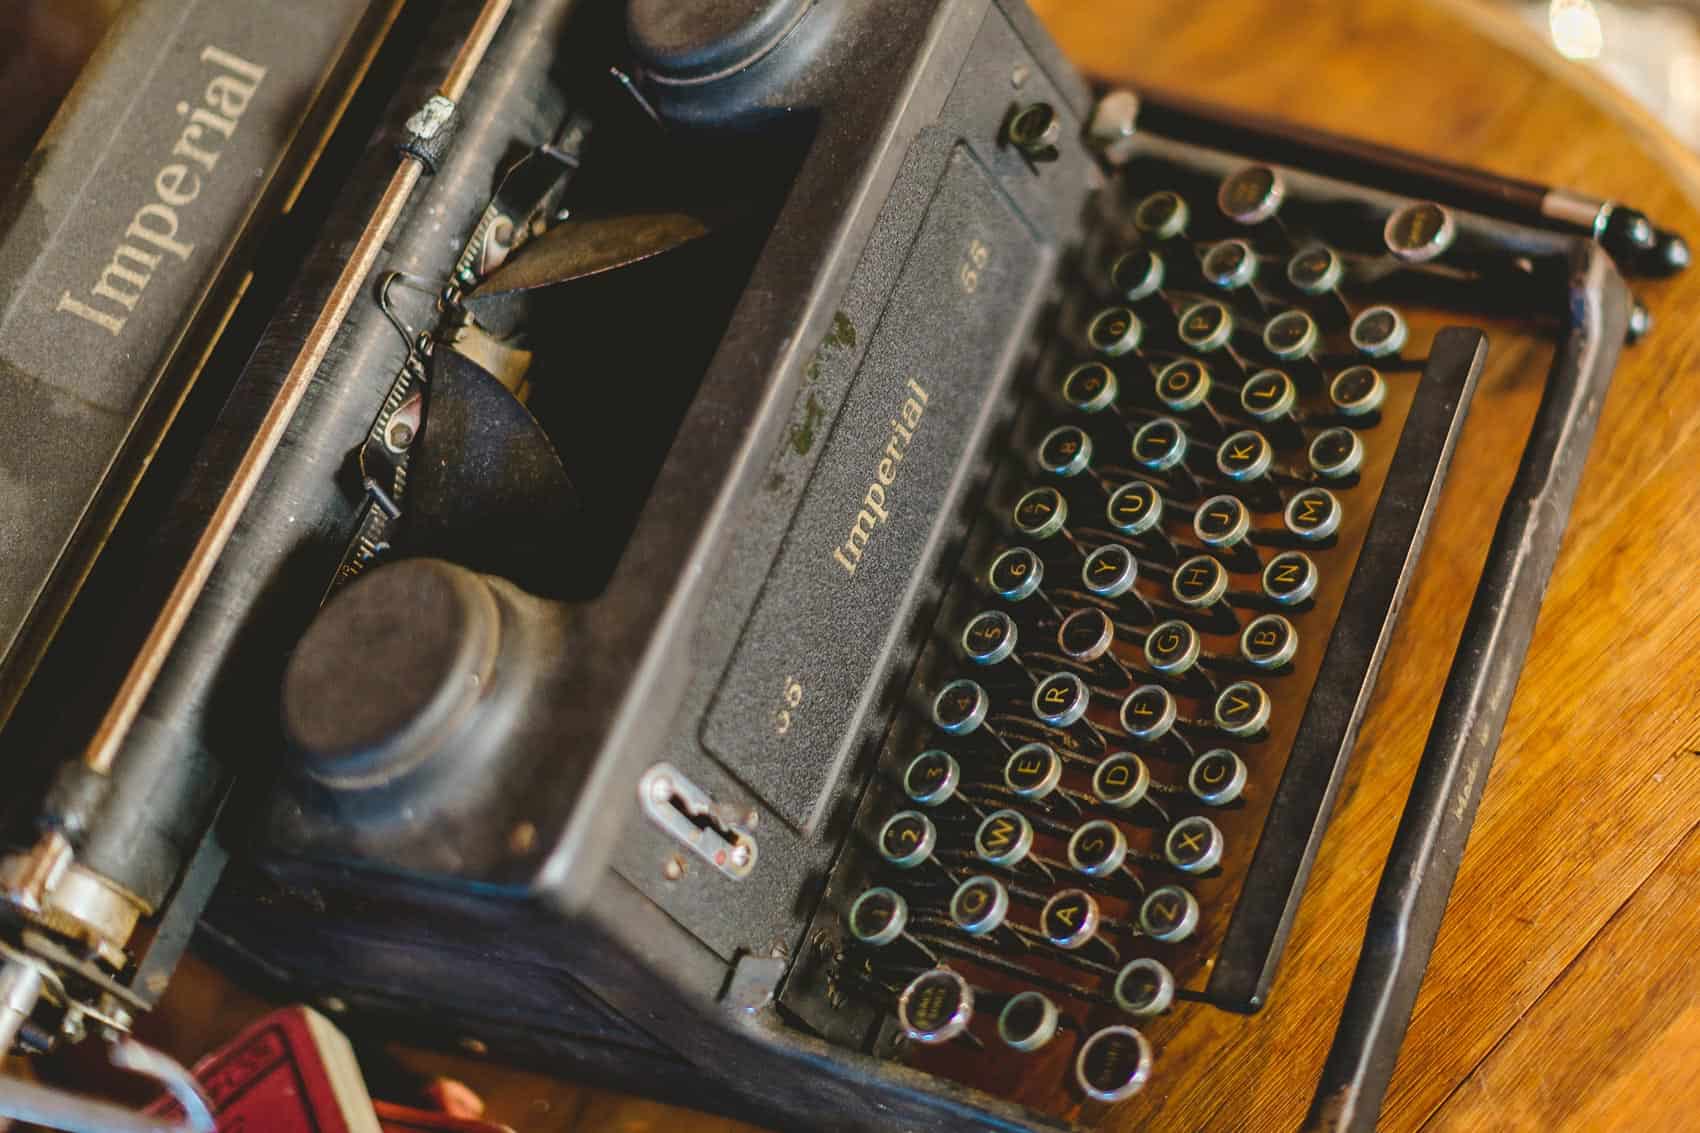 Old imperial typewriter on wooden desk